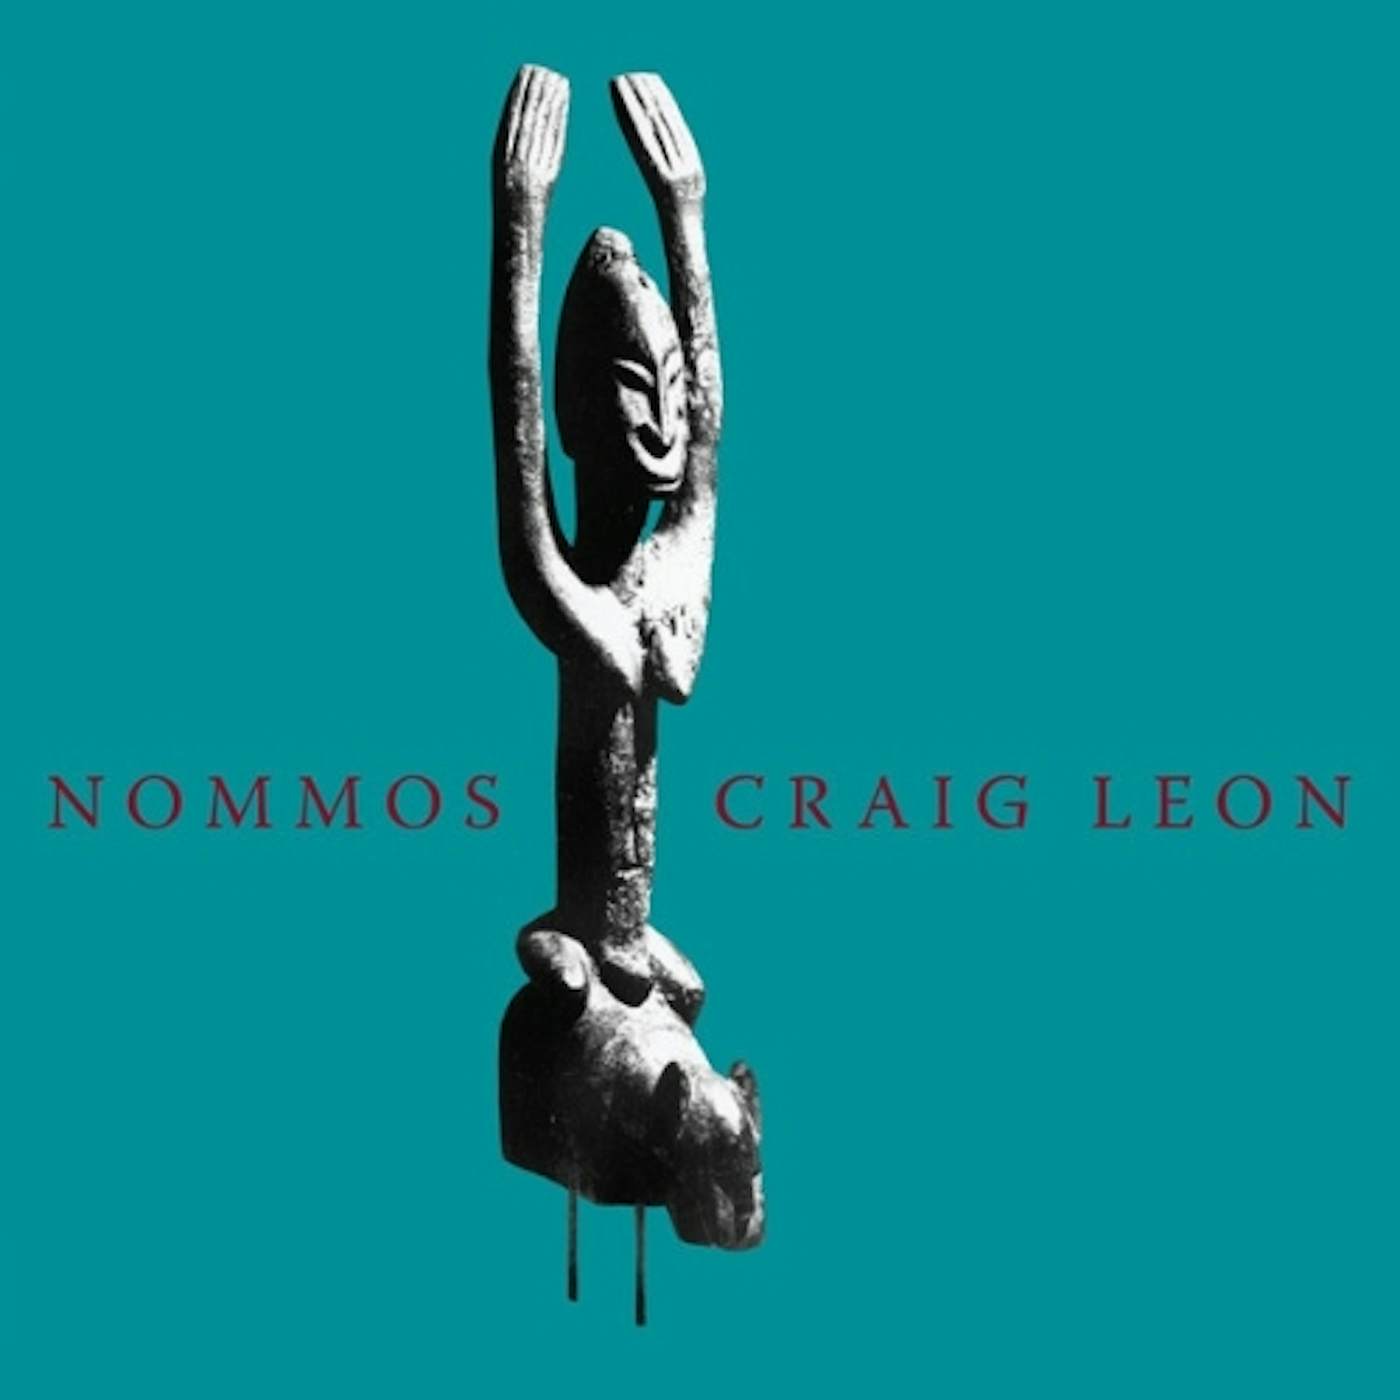 Craig Leon NOMMOS CD